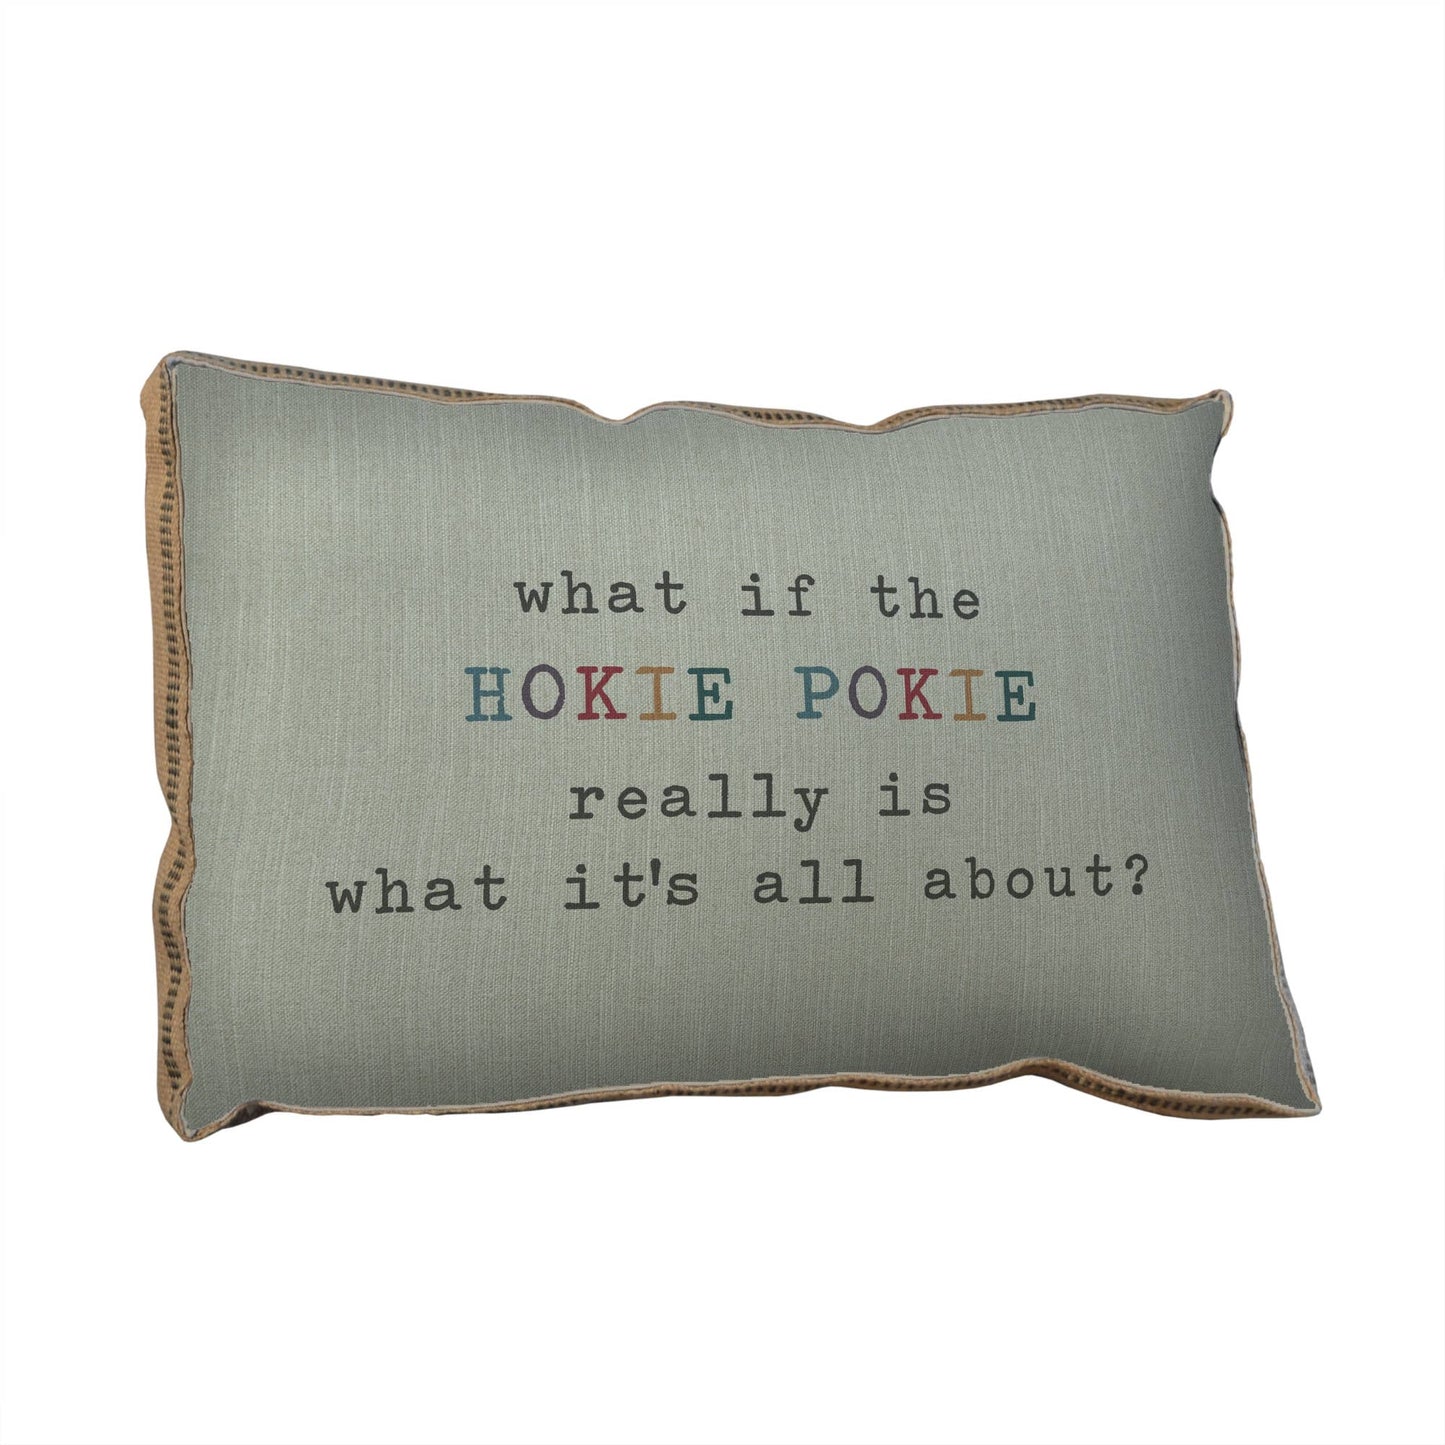 23" x 15" - Decorative Pillow - Hokie Pokie